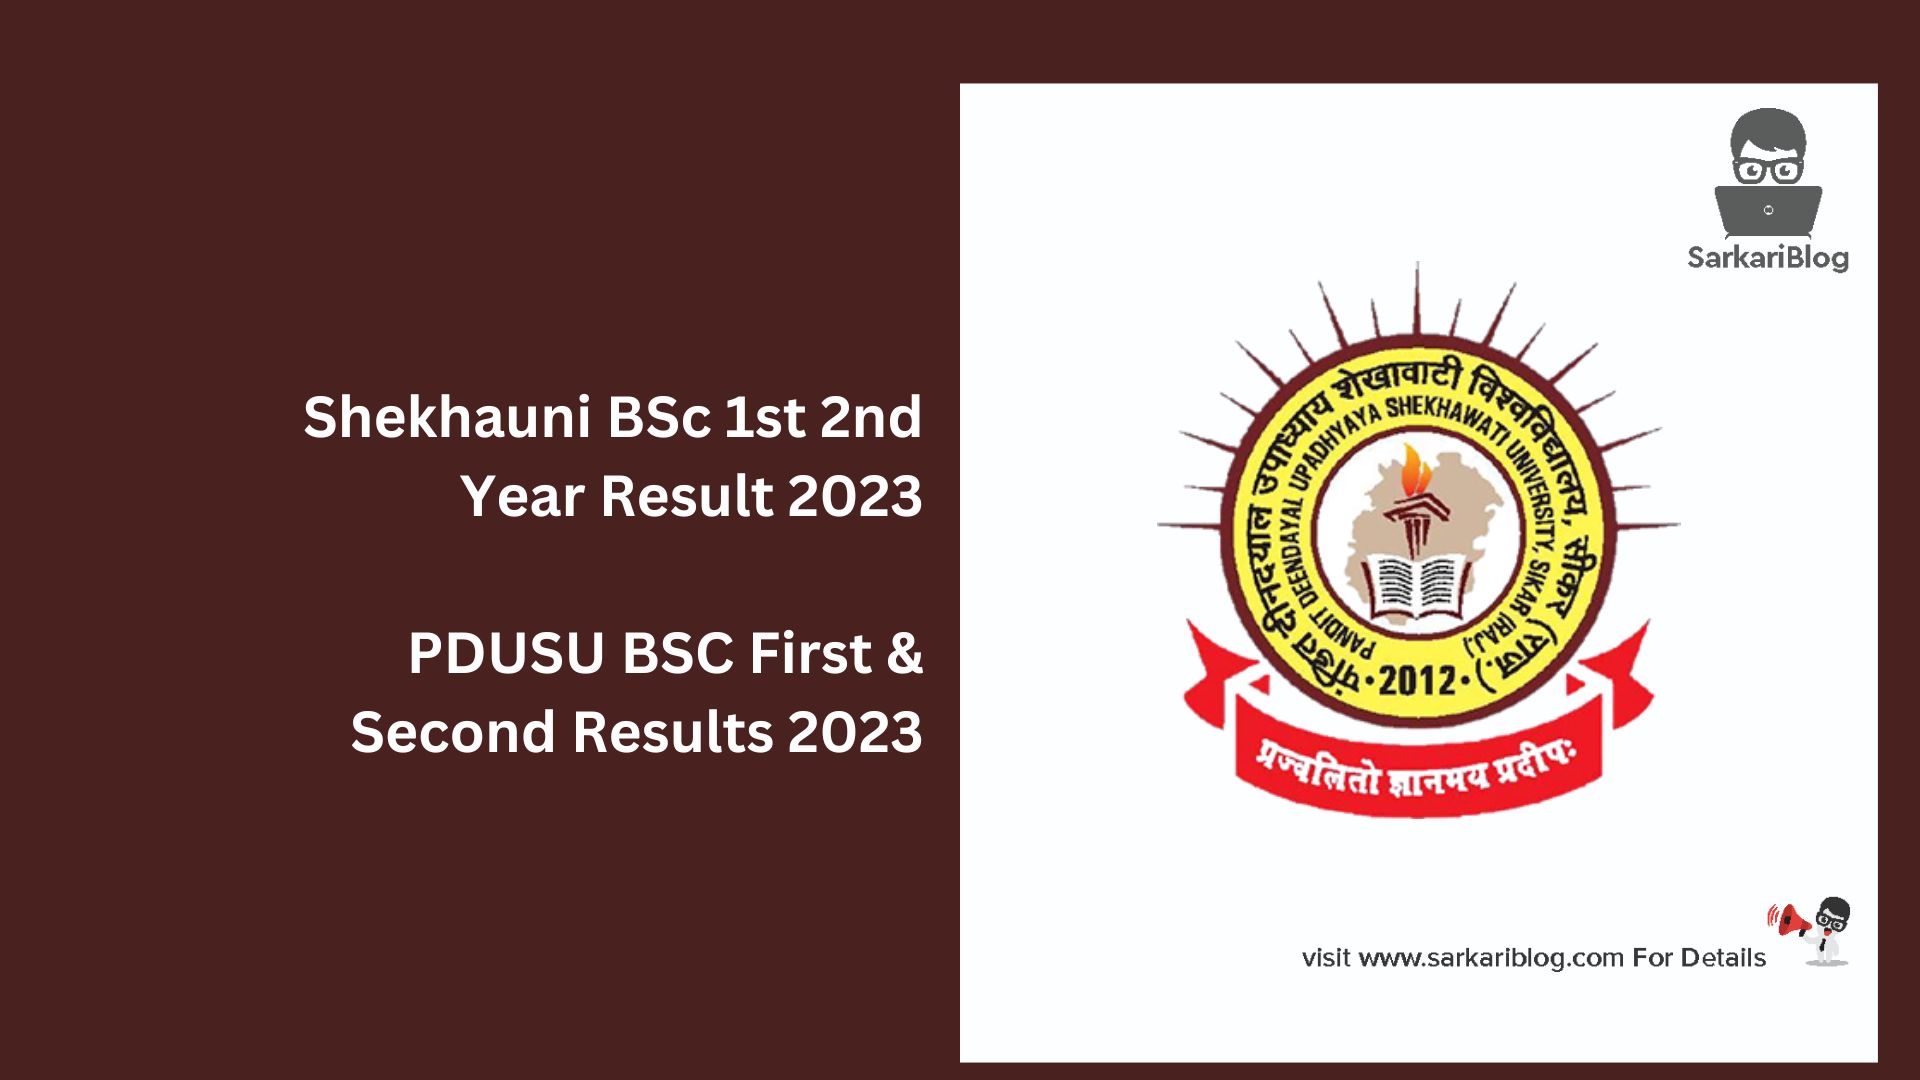 Shekhauni BSc 1st 2nd Year Result 2023